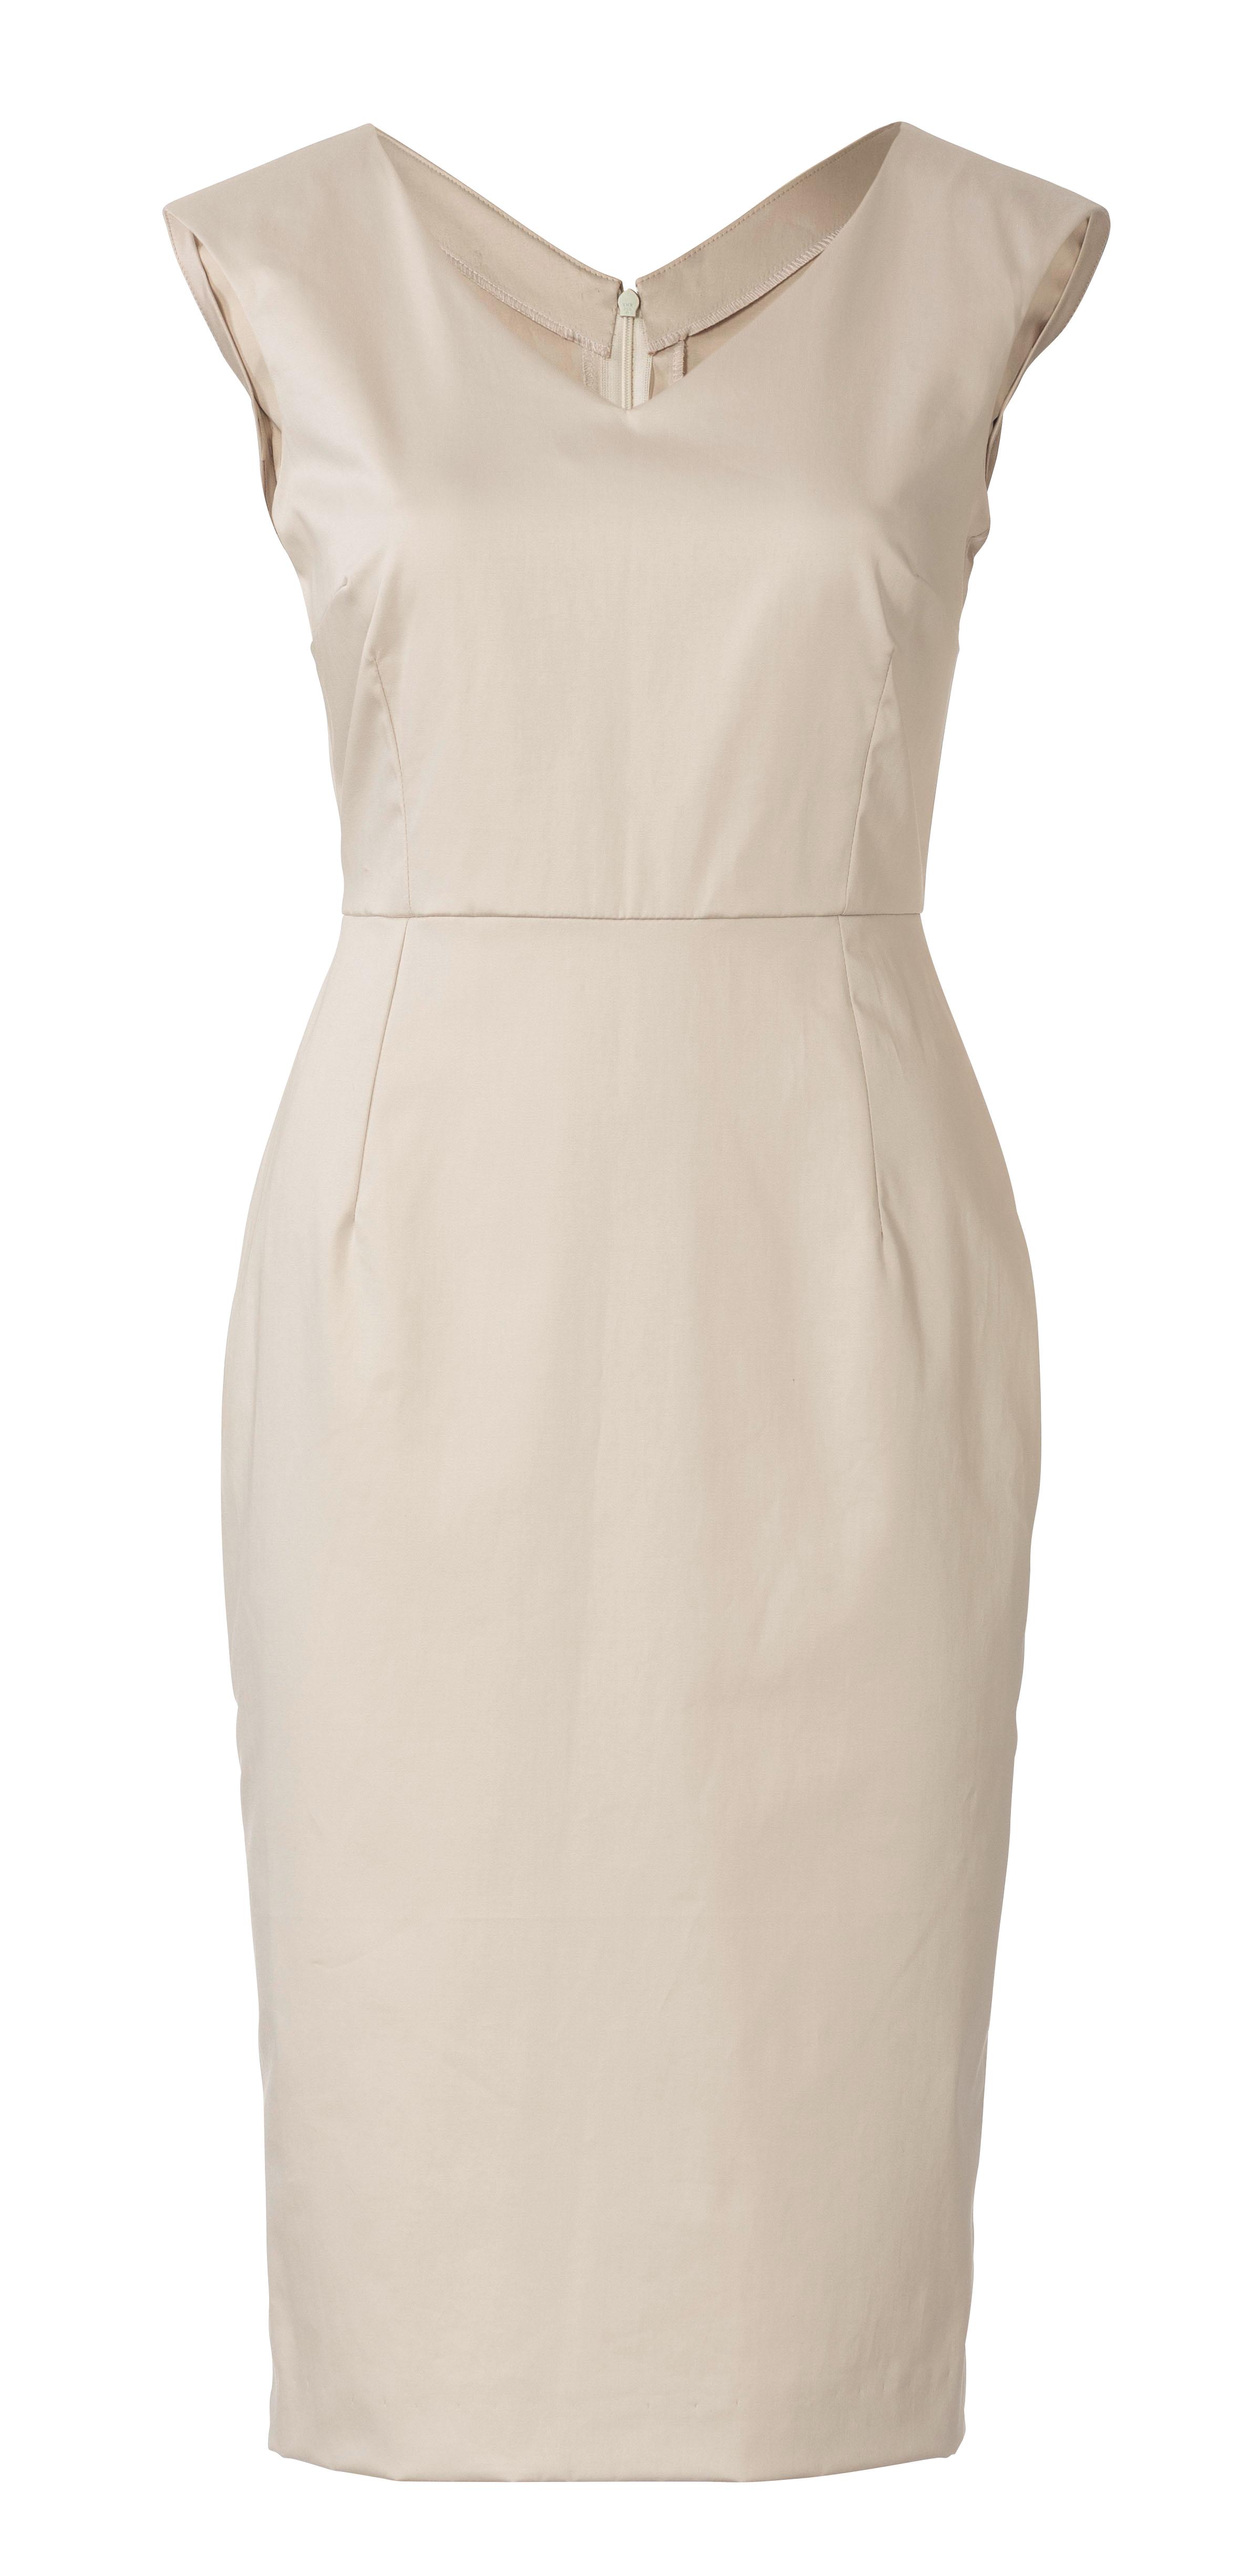 Burda B6228 Dress with Shirring Sewing Pattern